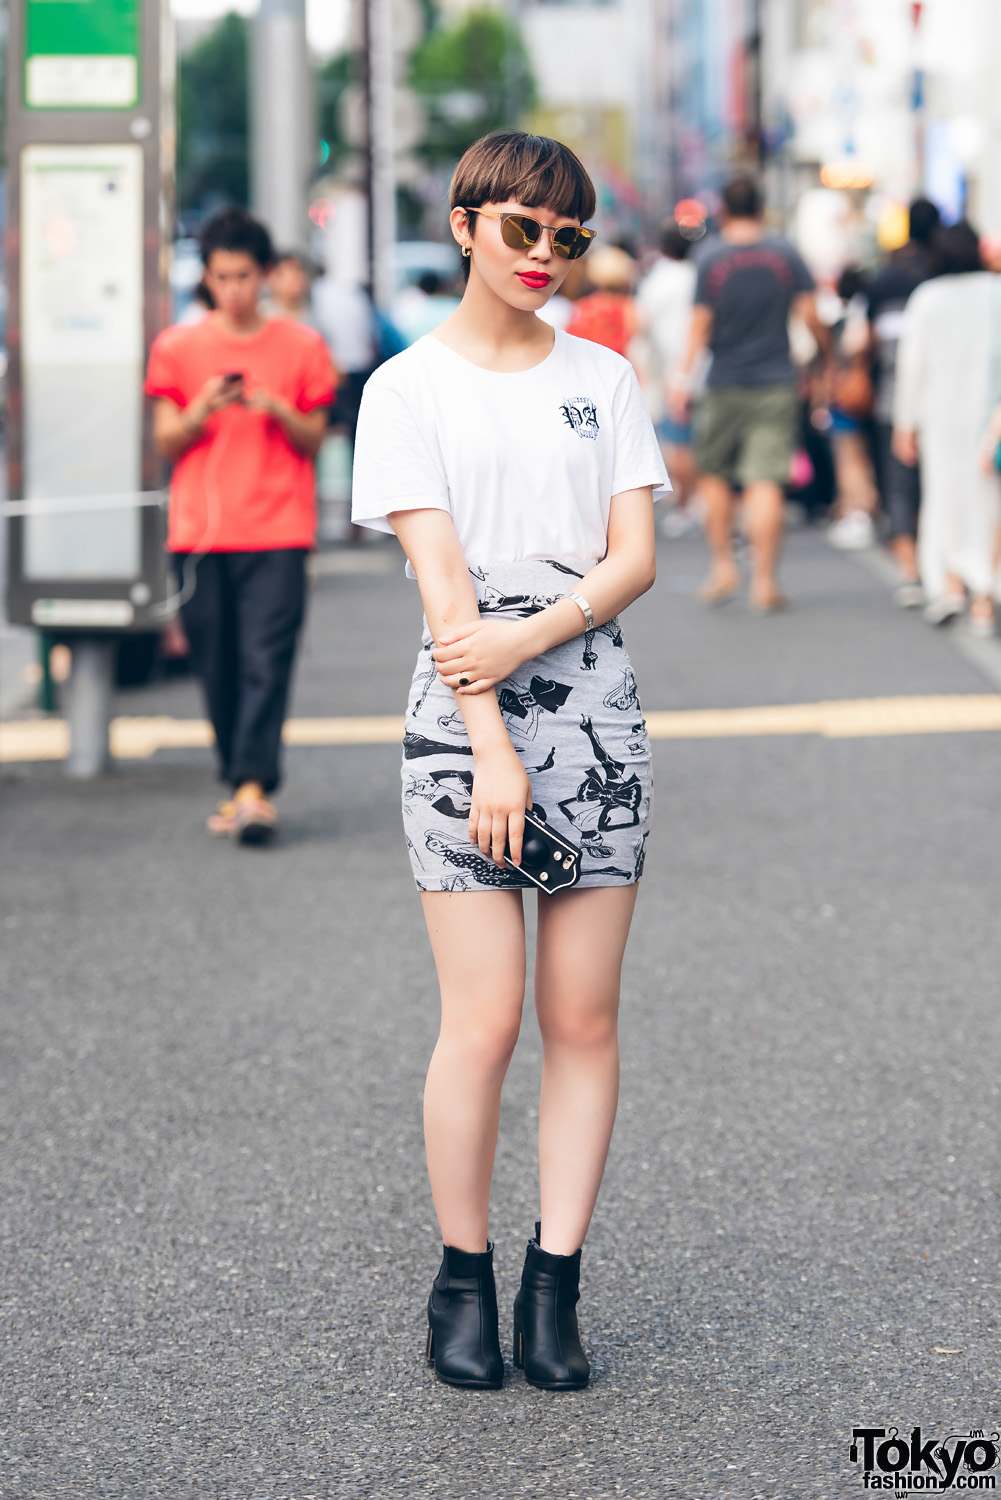 Harajuku Girl in Monochrome Street Fashion w/ Pebbles, Jeremy Scott & Police Lifestyle